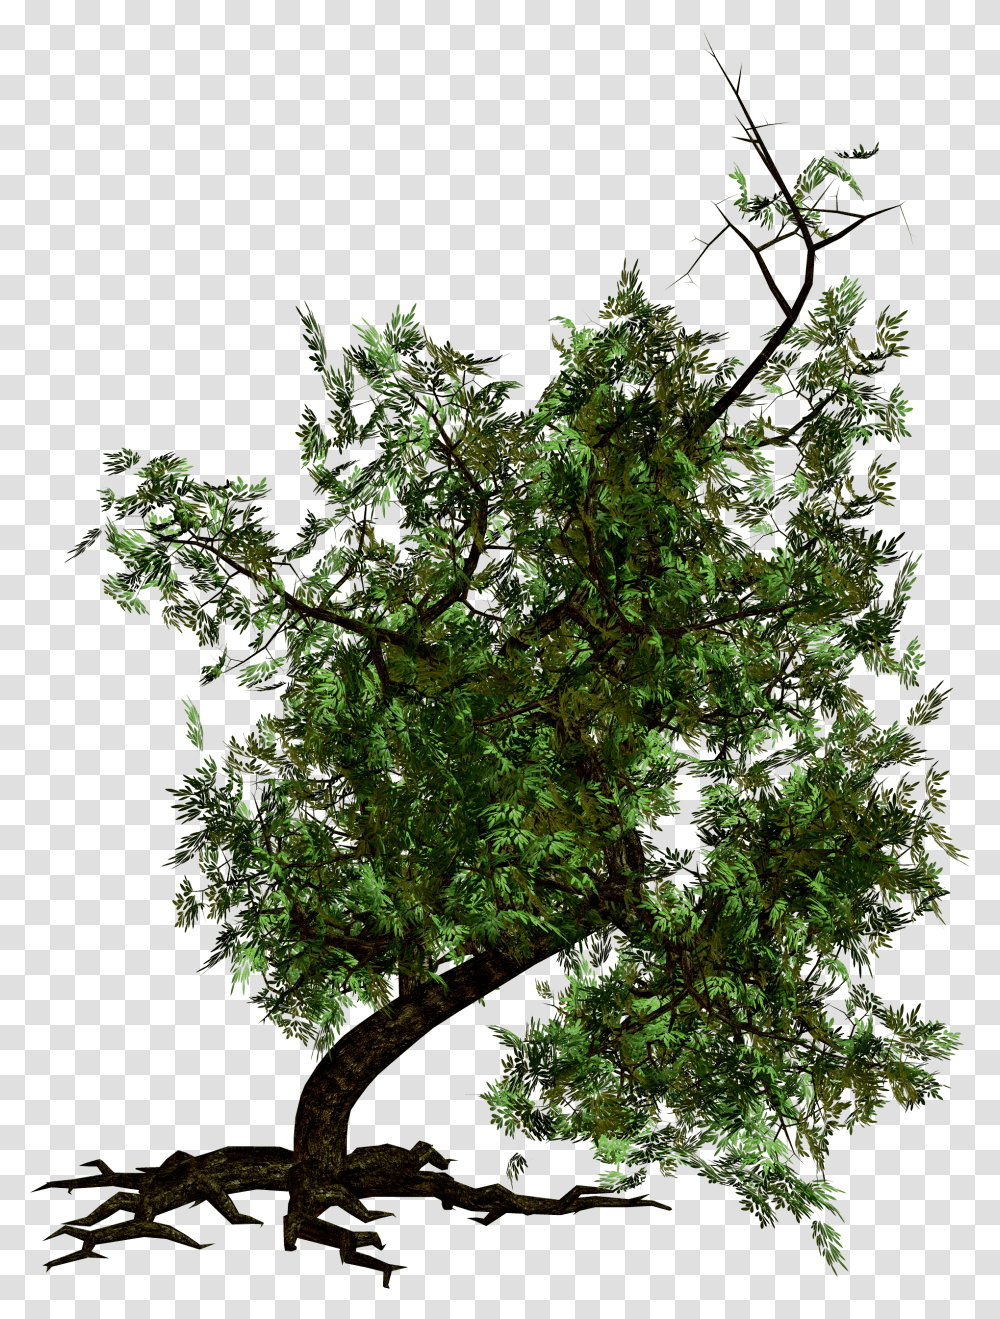 Download Free Tree Image Dlpngcom Portable Network Graphics, Plant, Tree Trunk, Vegetation, Outdoors Transparent Png